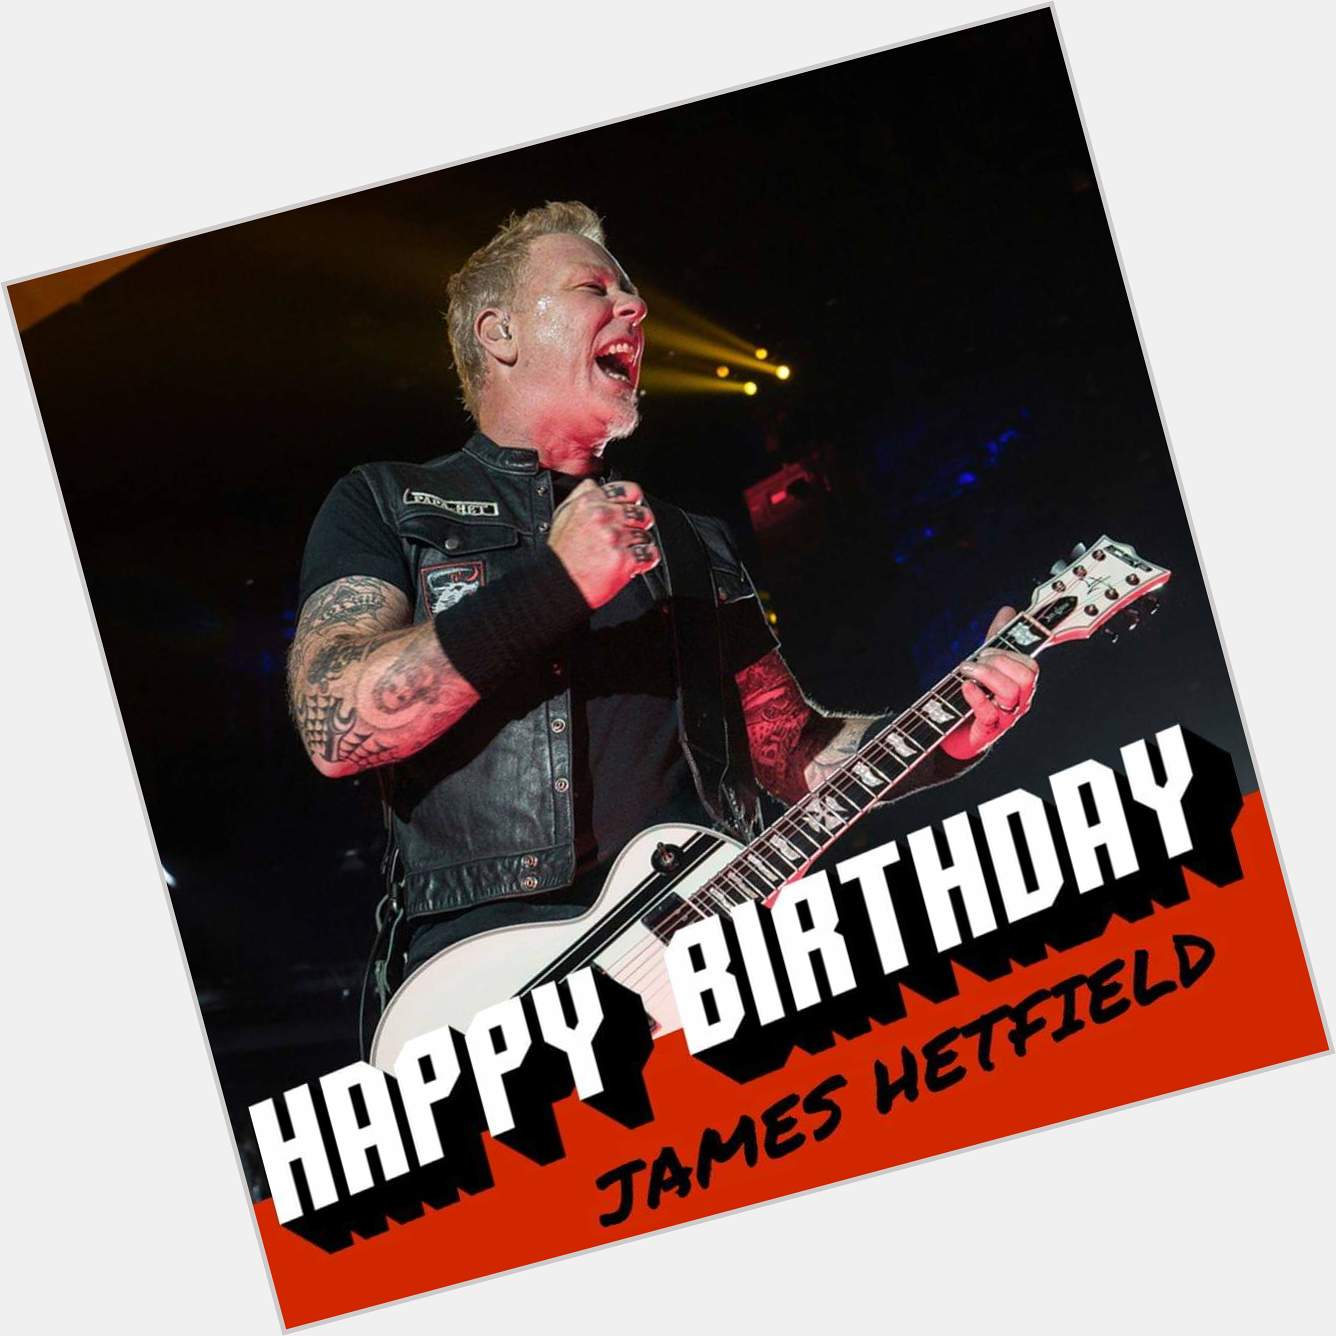 Happy birthday, james hetfield                 